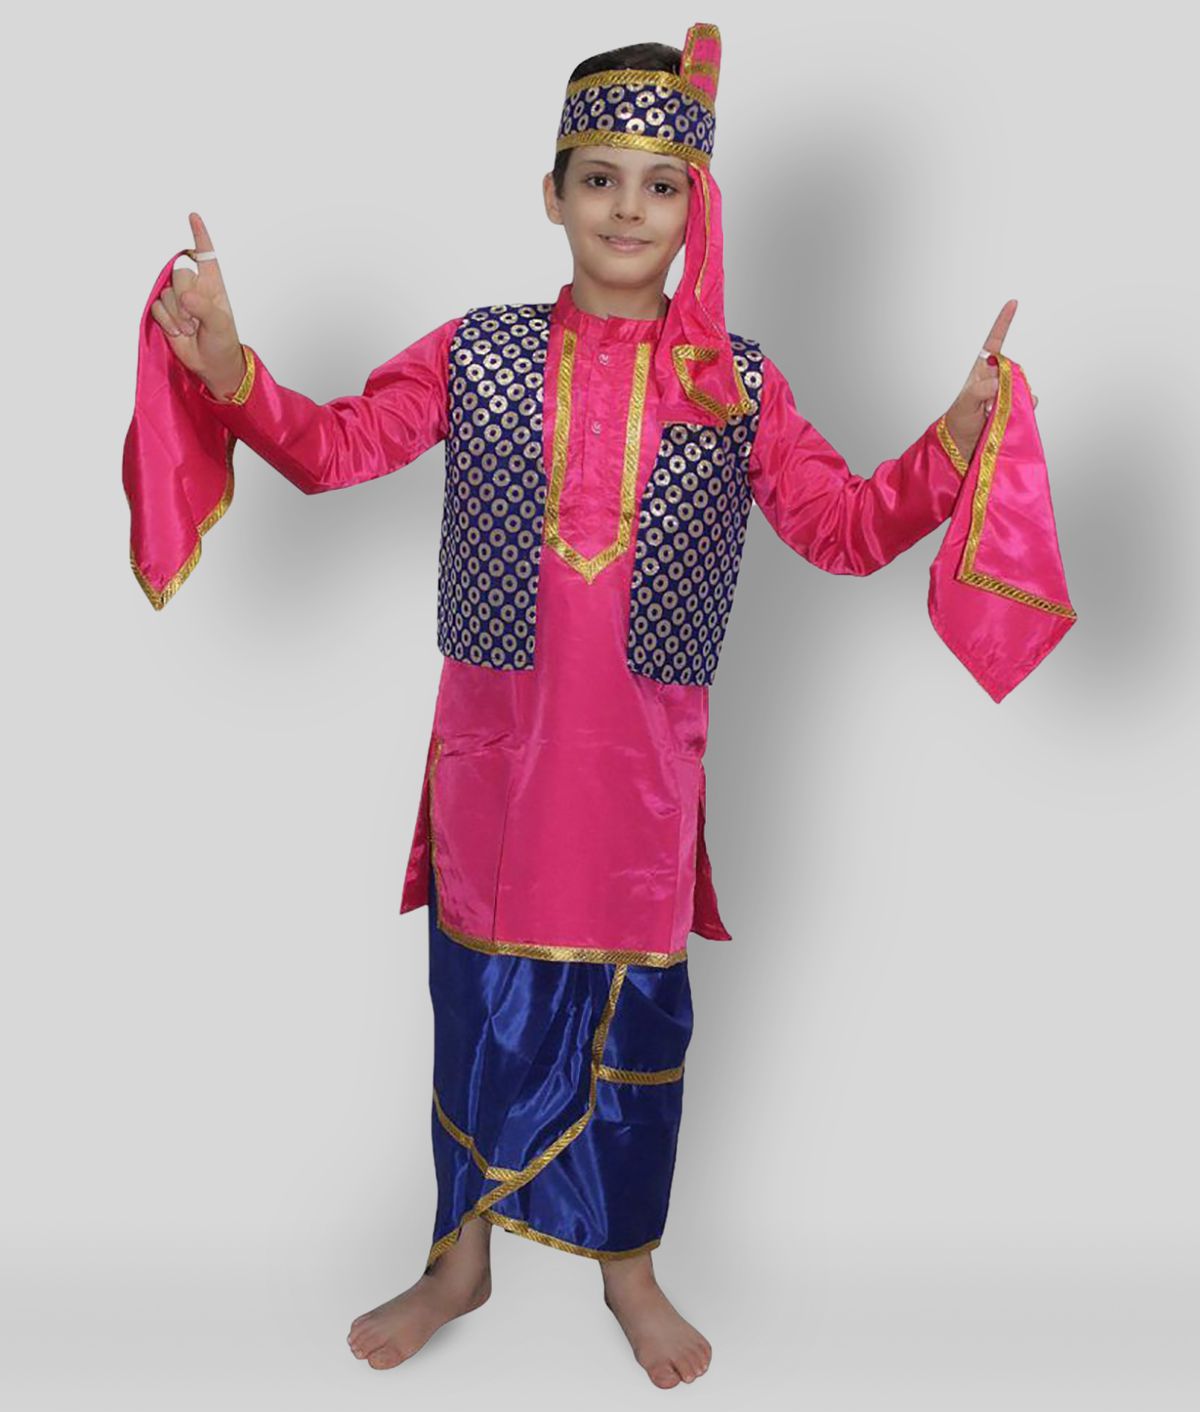     			Kaku Fancy Dresses Indian State Punjabi Folk Dance Costume for Kids/ Bhangda Gidda Dance Costume For Boys - Magenta & Blue, 5-6 Years